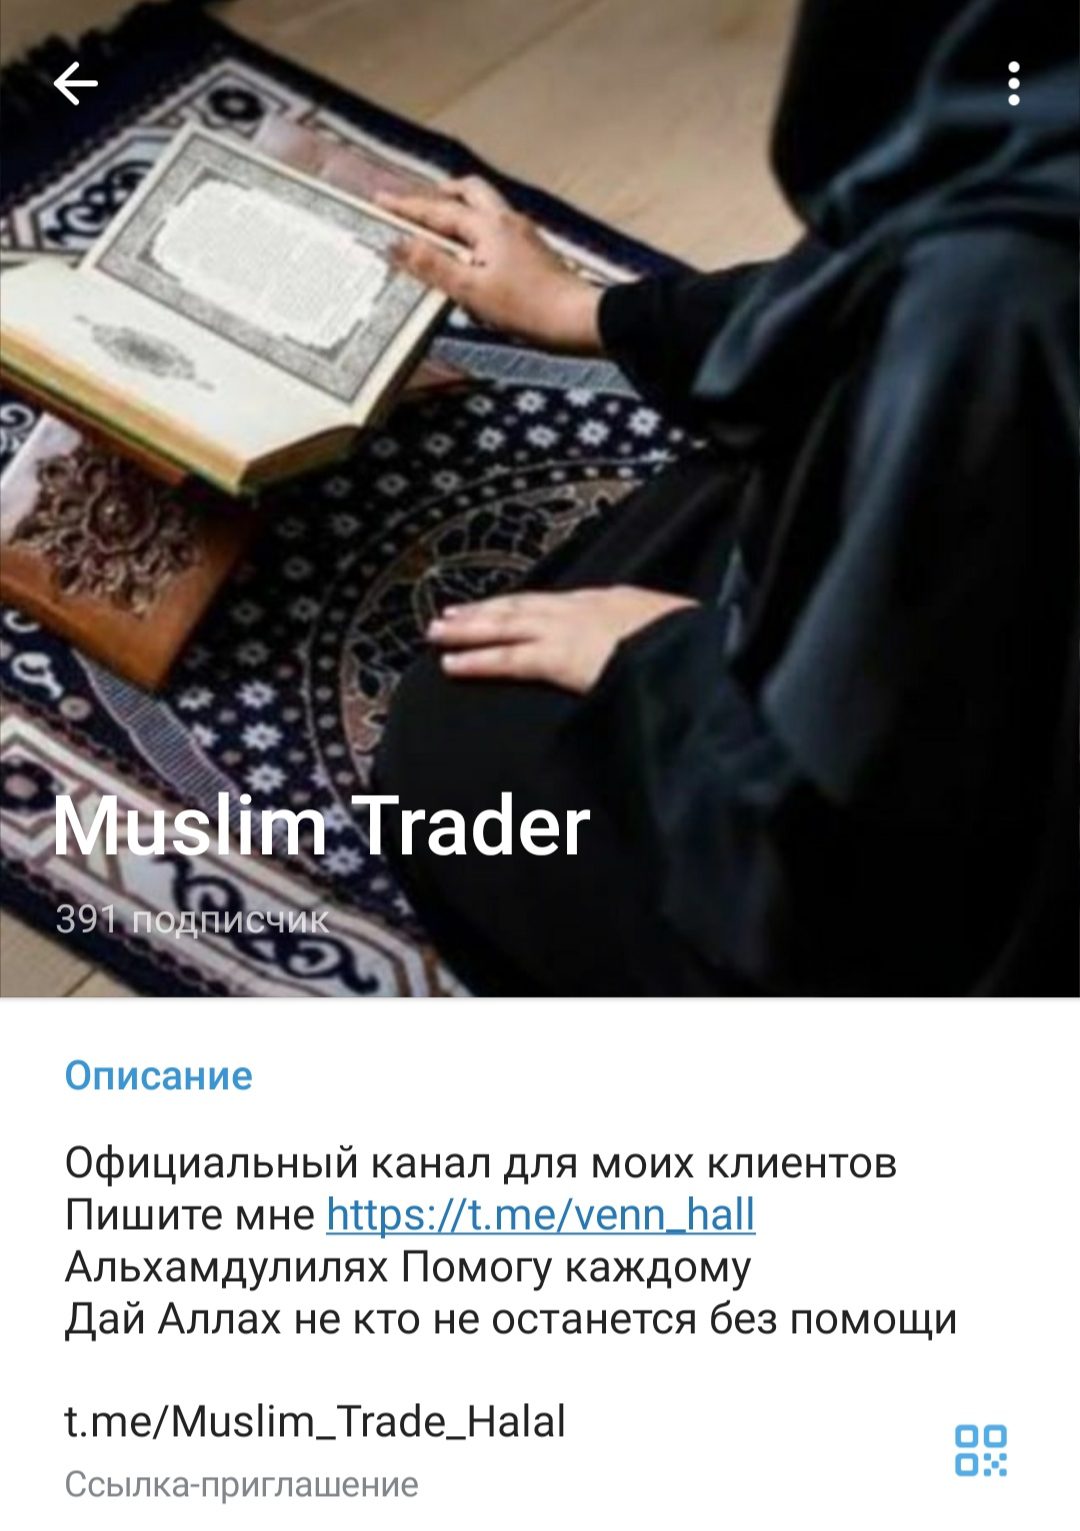 Muslim Trader телеграмм